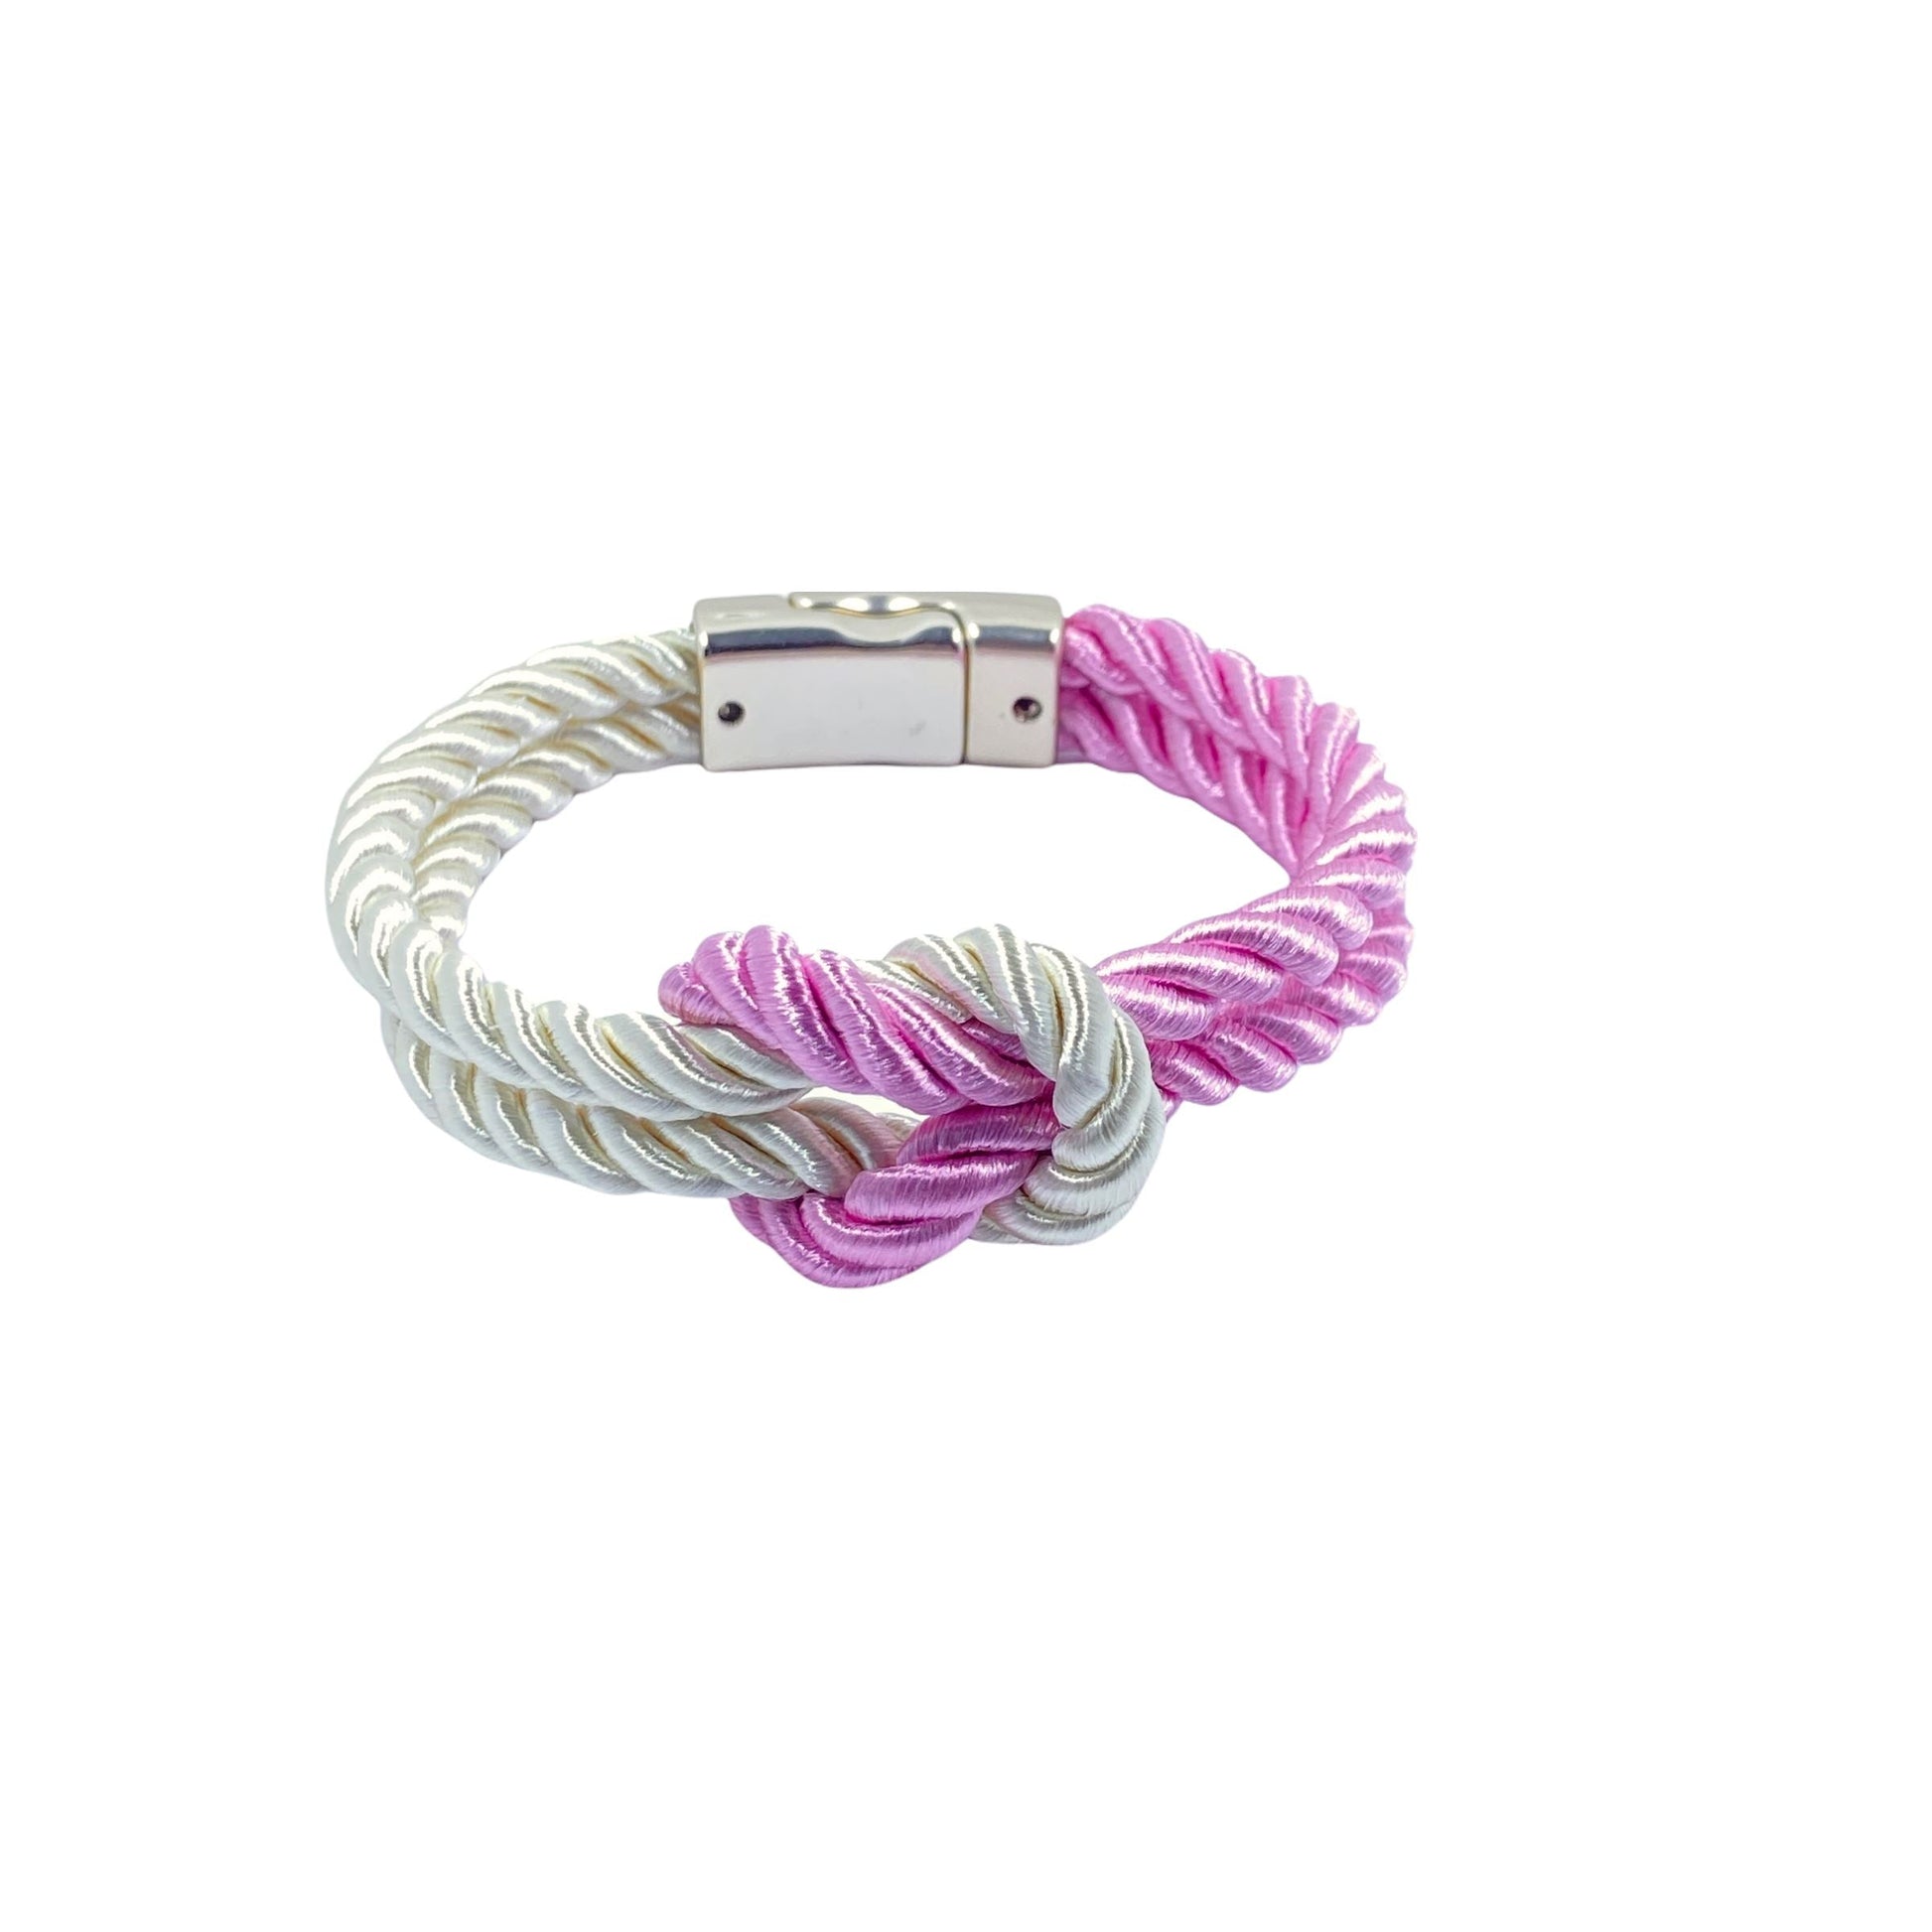 The Original Love Knot Satin Rope Bracelet- Pink and White Bracelets Trendzio Pink and White 